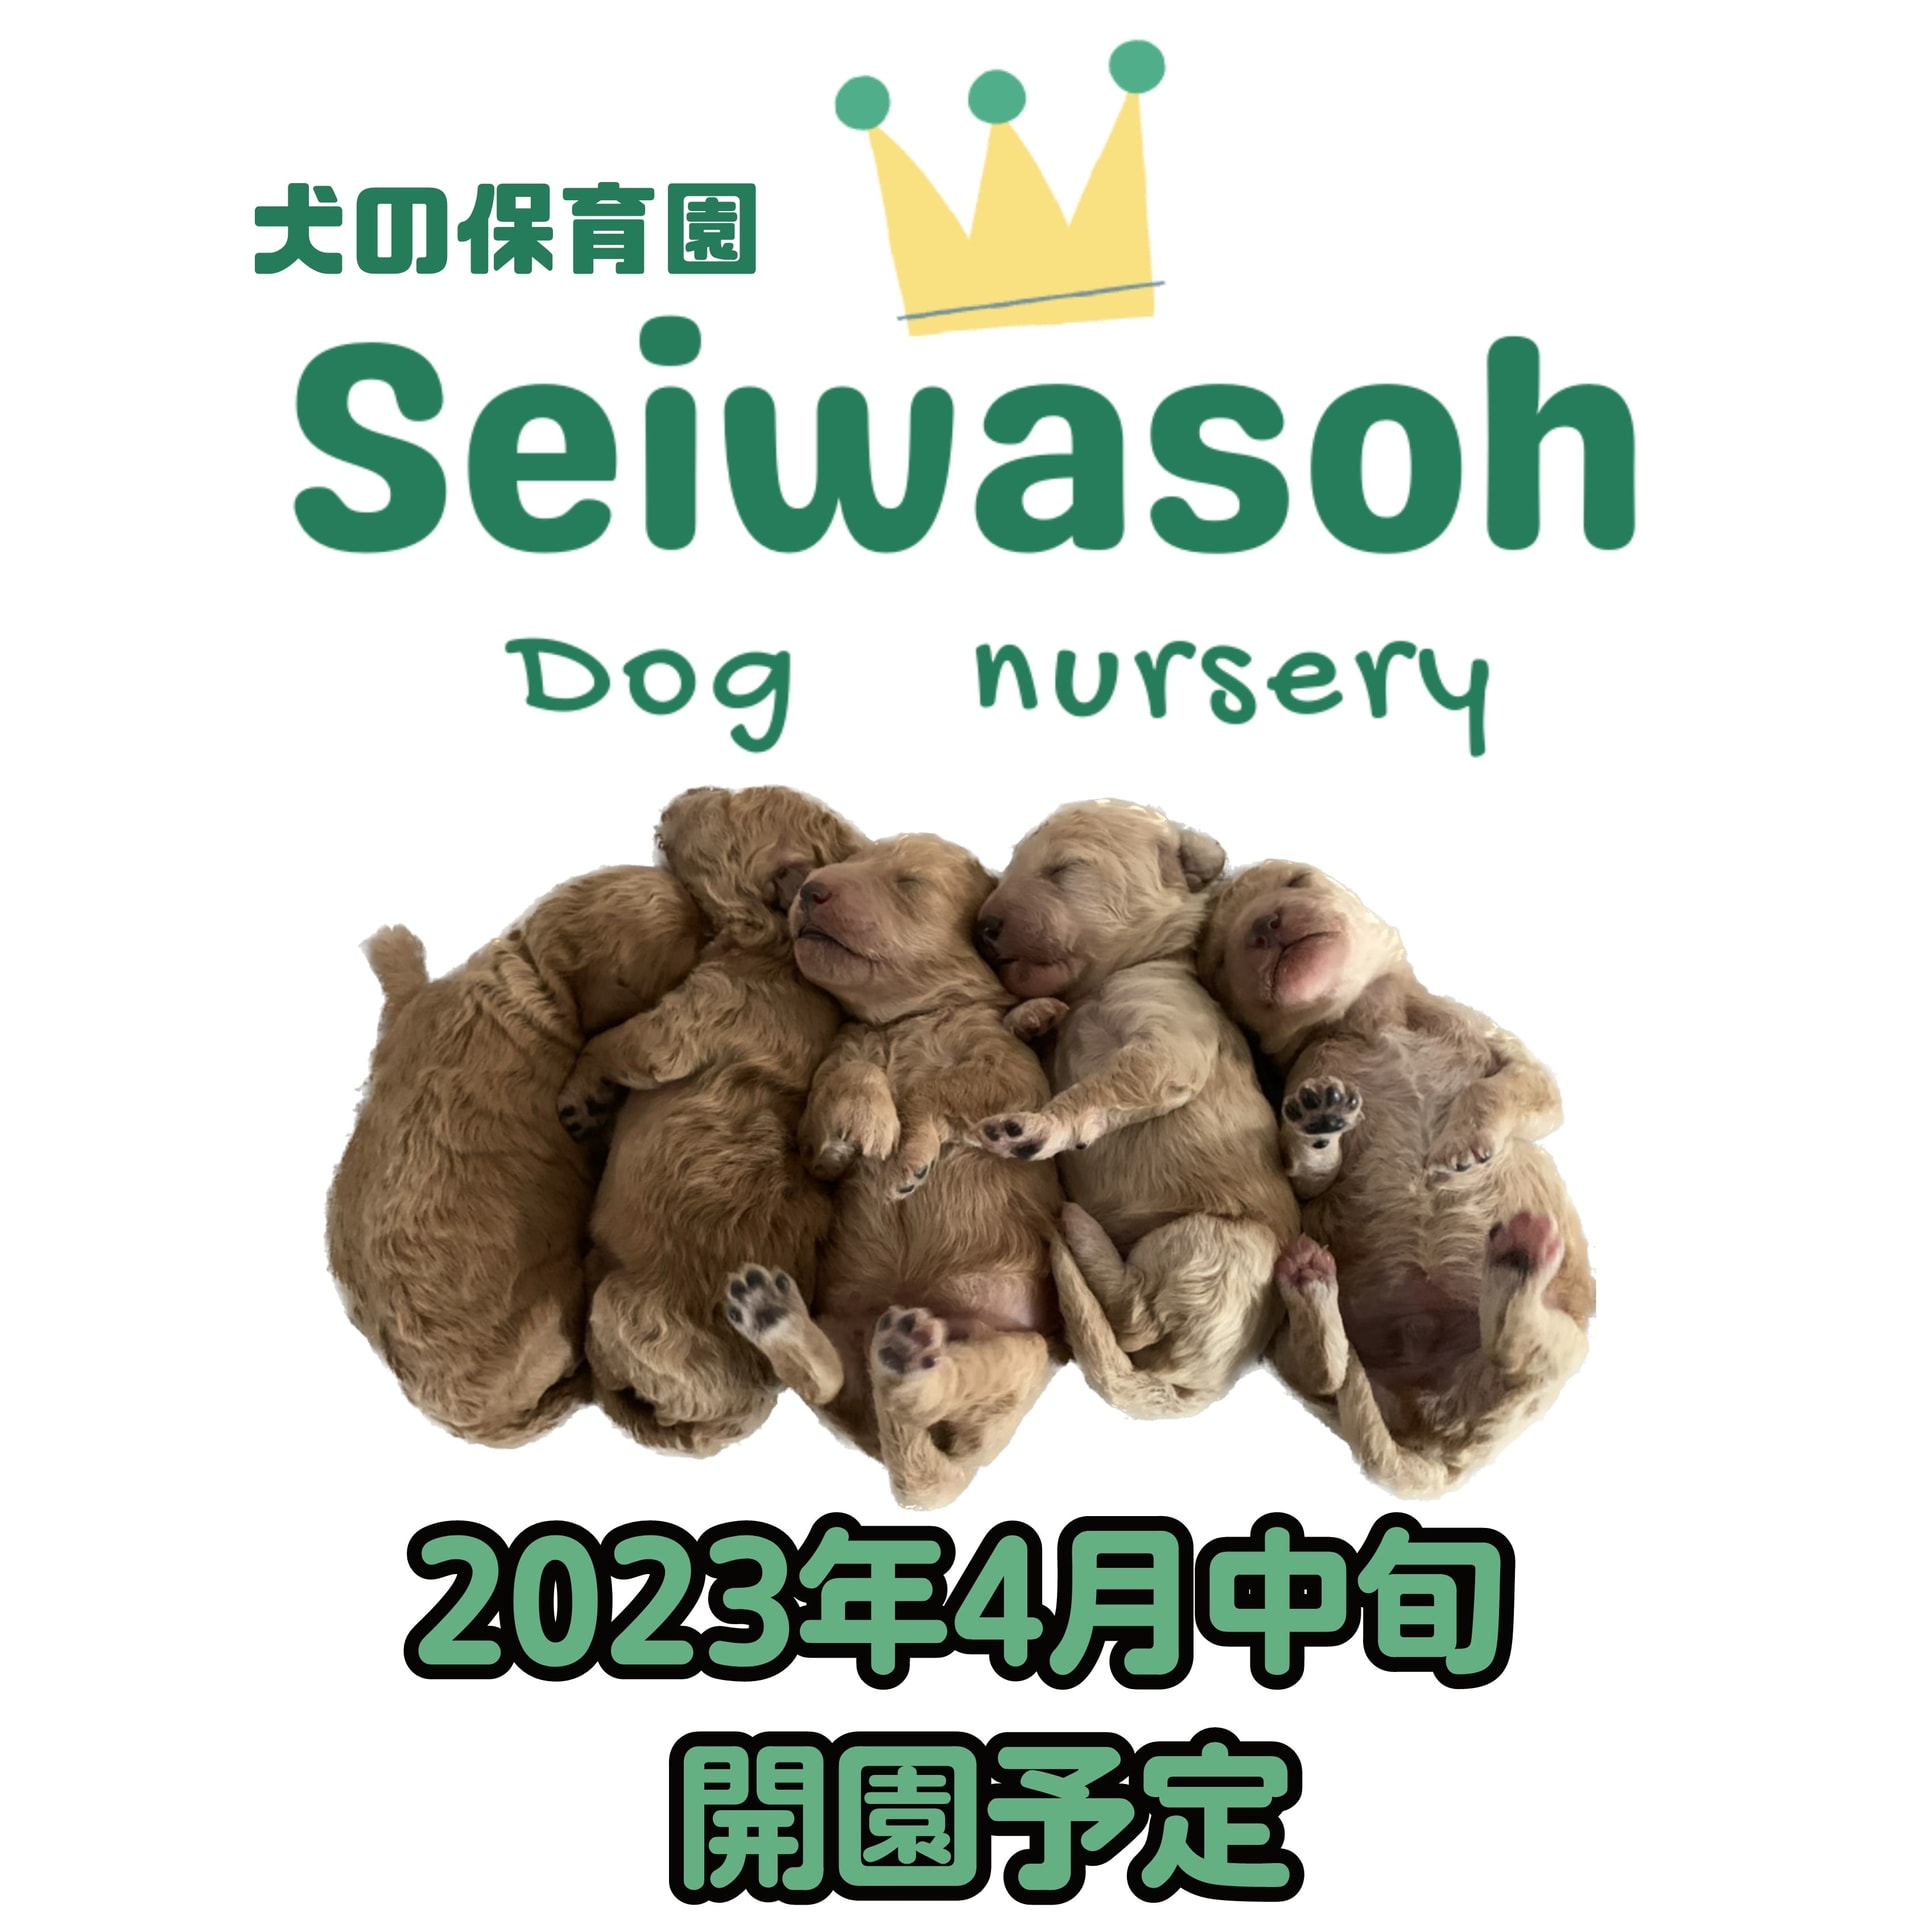 『犬の保育園 Seiwasoh dog nursery』2023年4月中旬開園予定